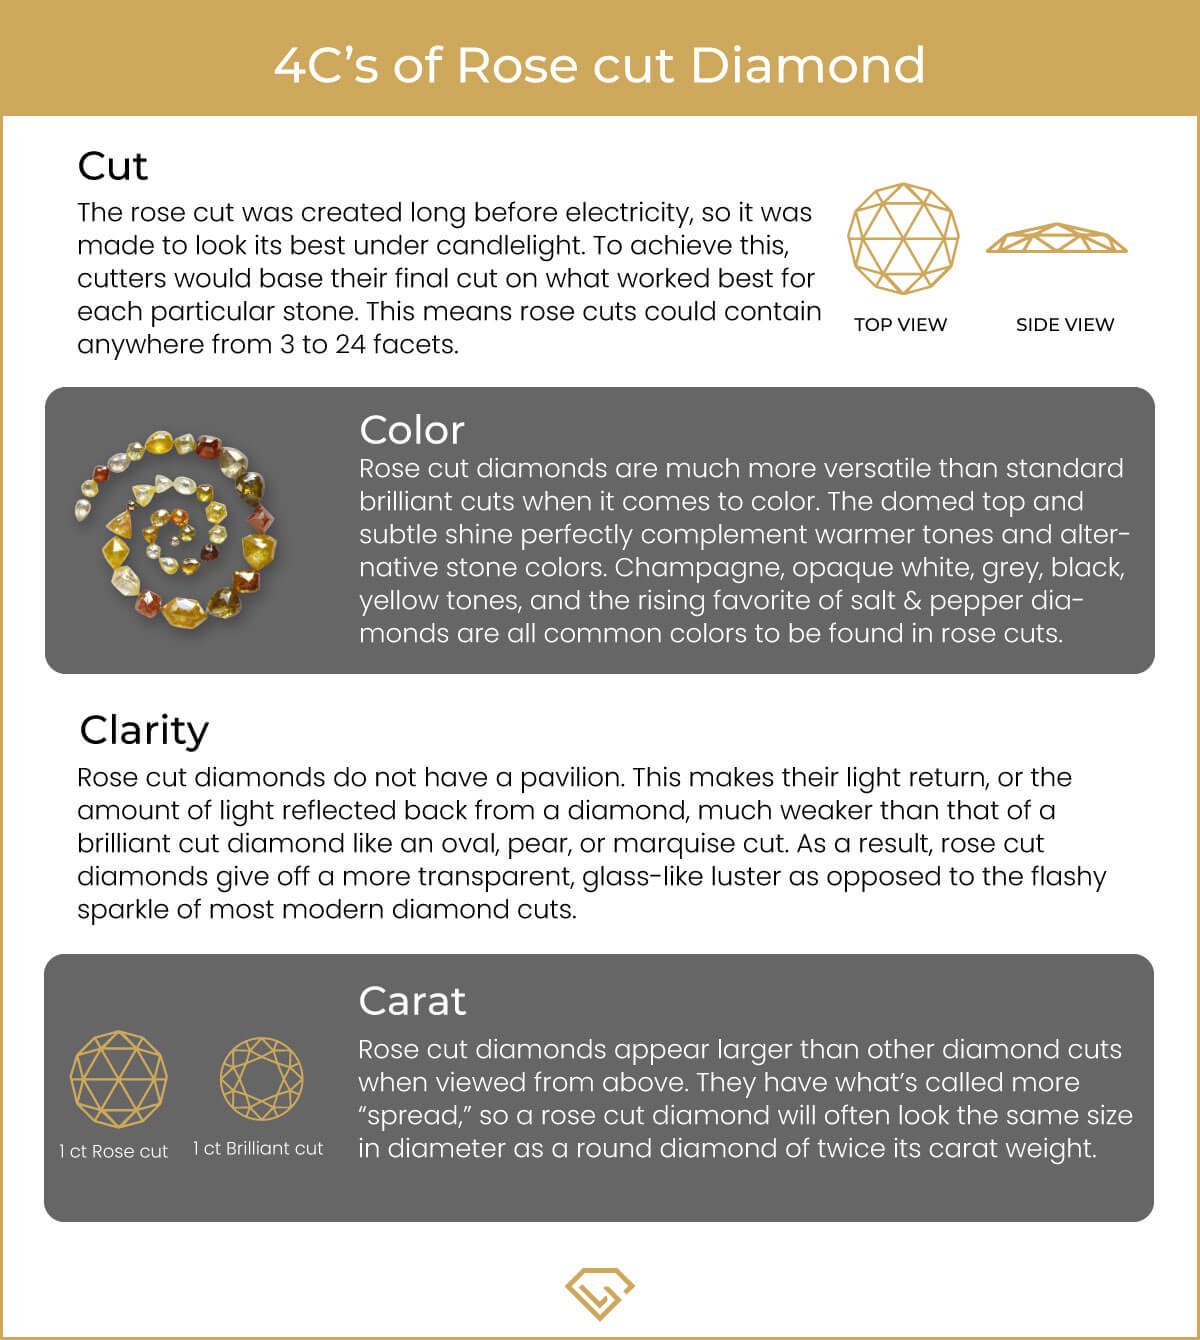 rose cut diamond 4c infographic